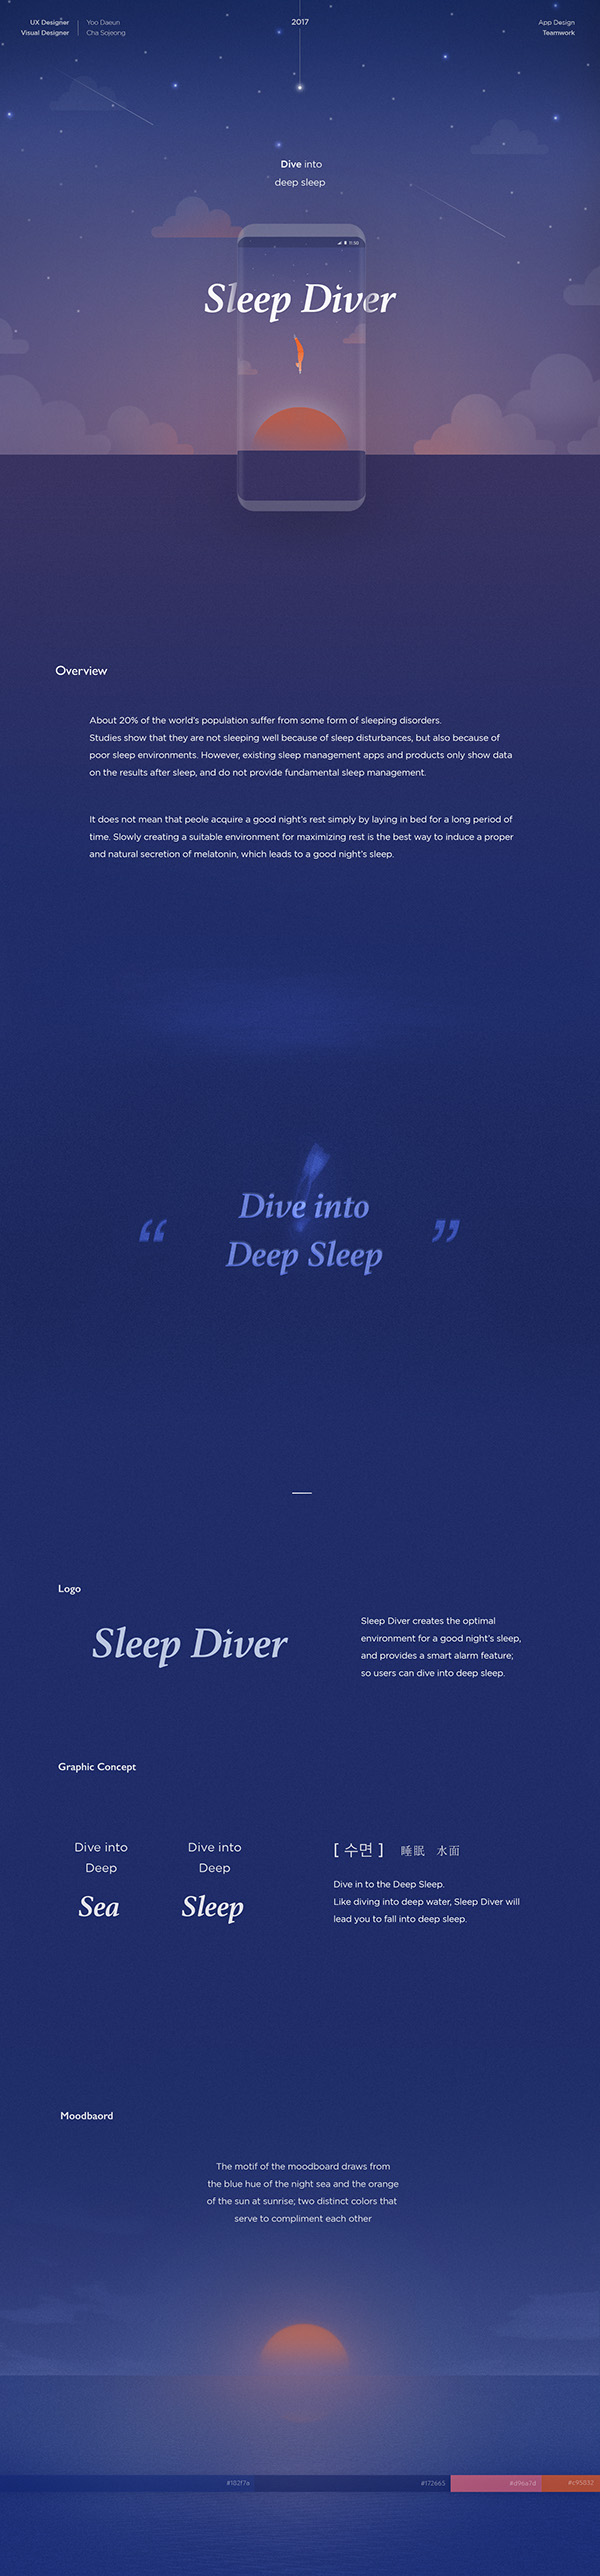 Sleep Diver